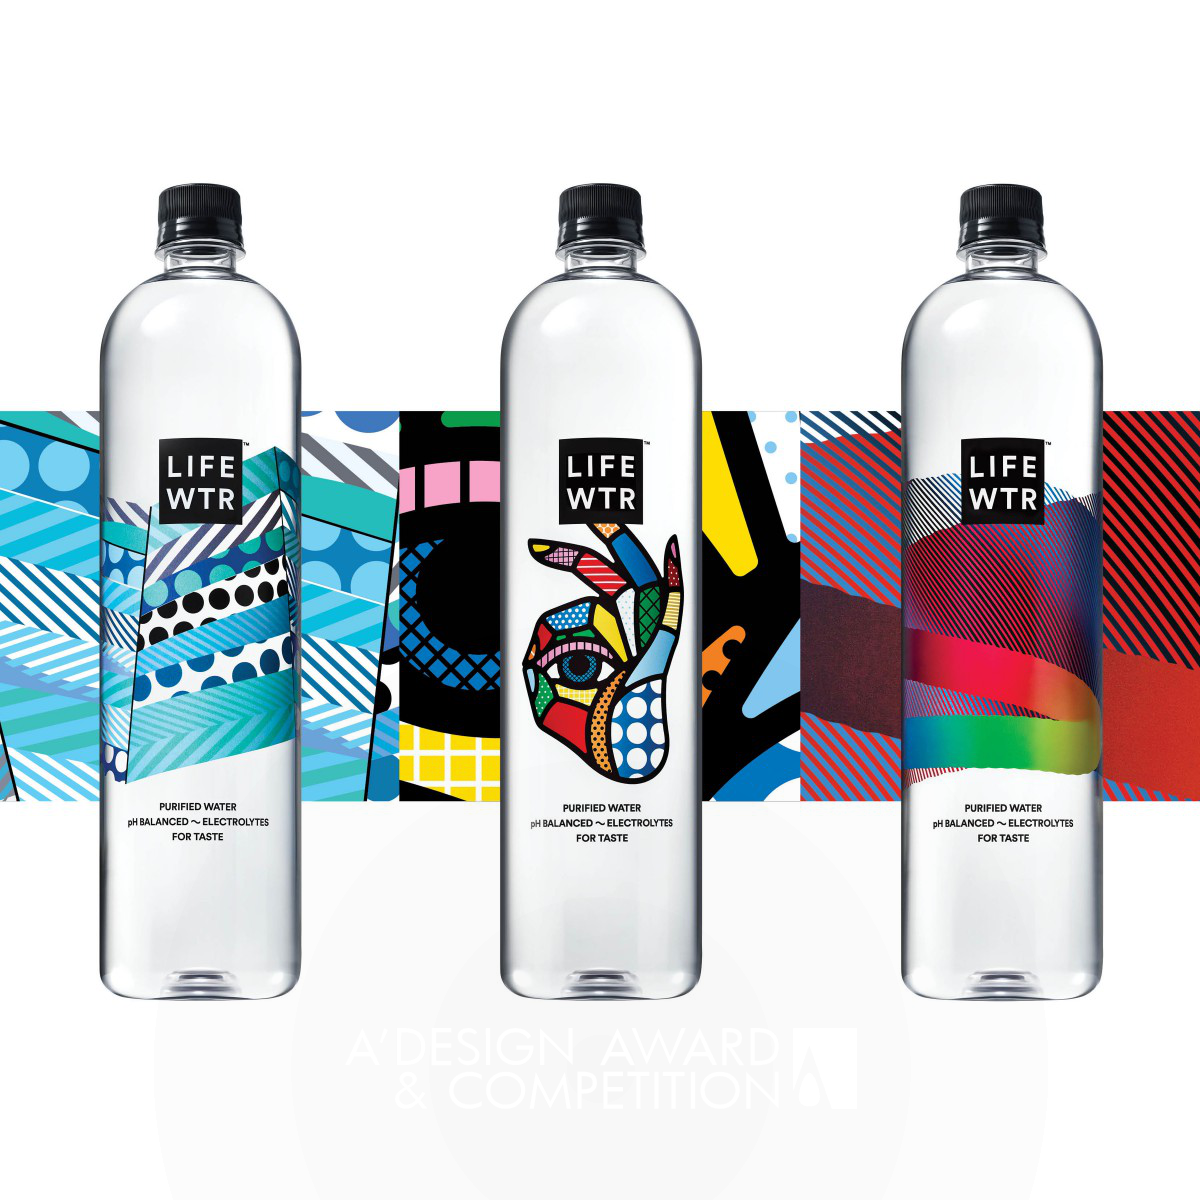 LIFEWTR Series 1 Bottle Graphics by PepsiCo Design & Innovation